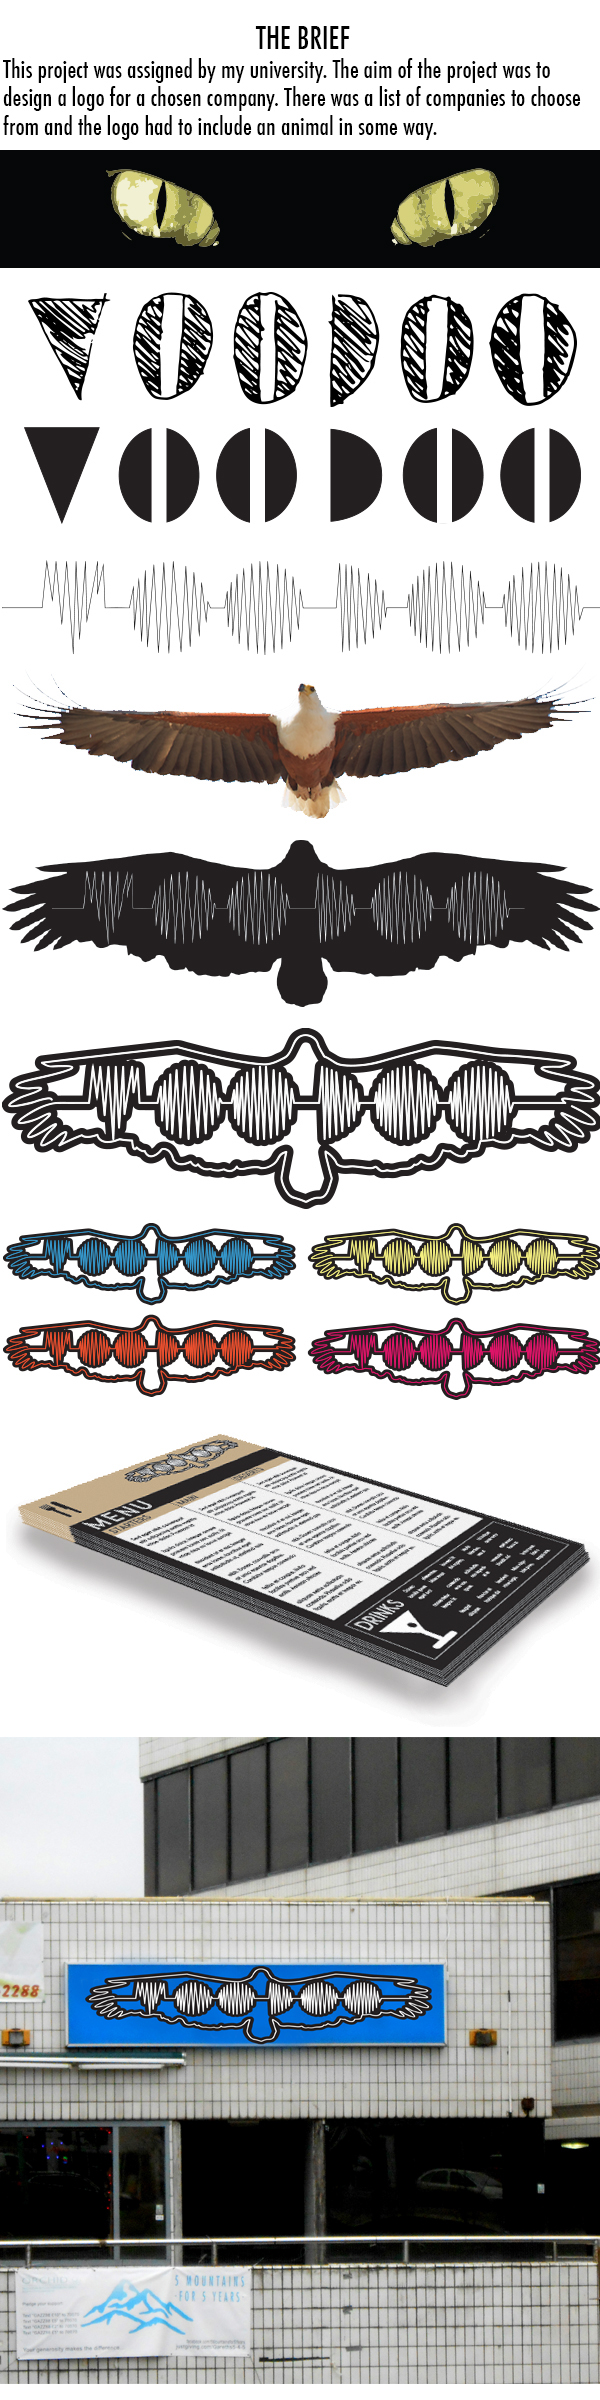 logo design brand menu nightclub Project voodoo animal logos eagle bird typographic sound waves Soundwaves